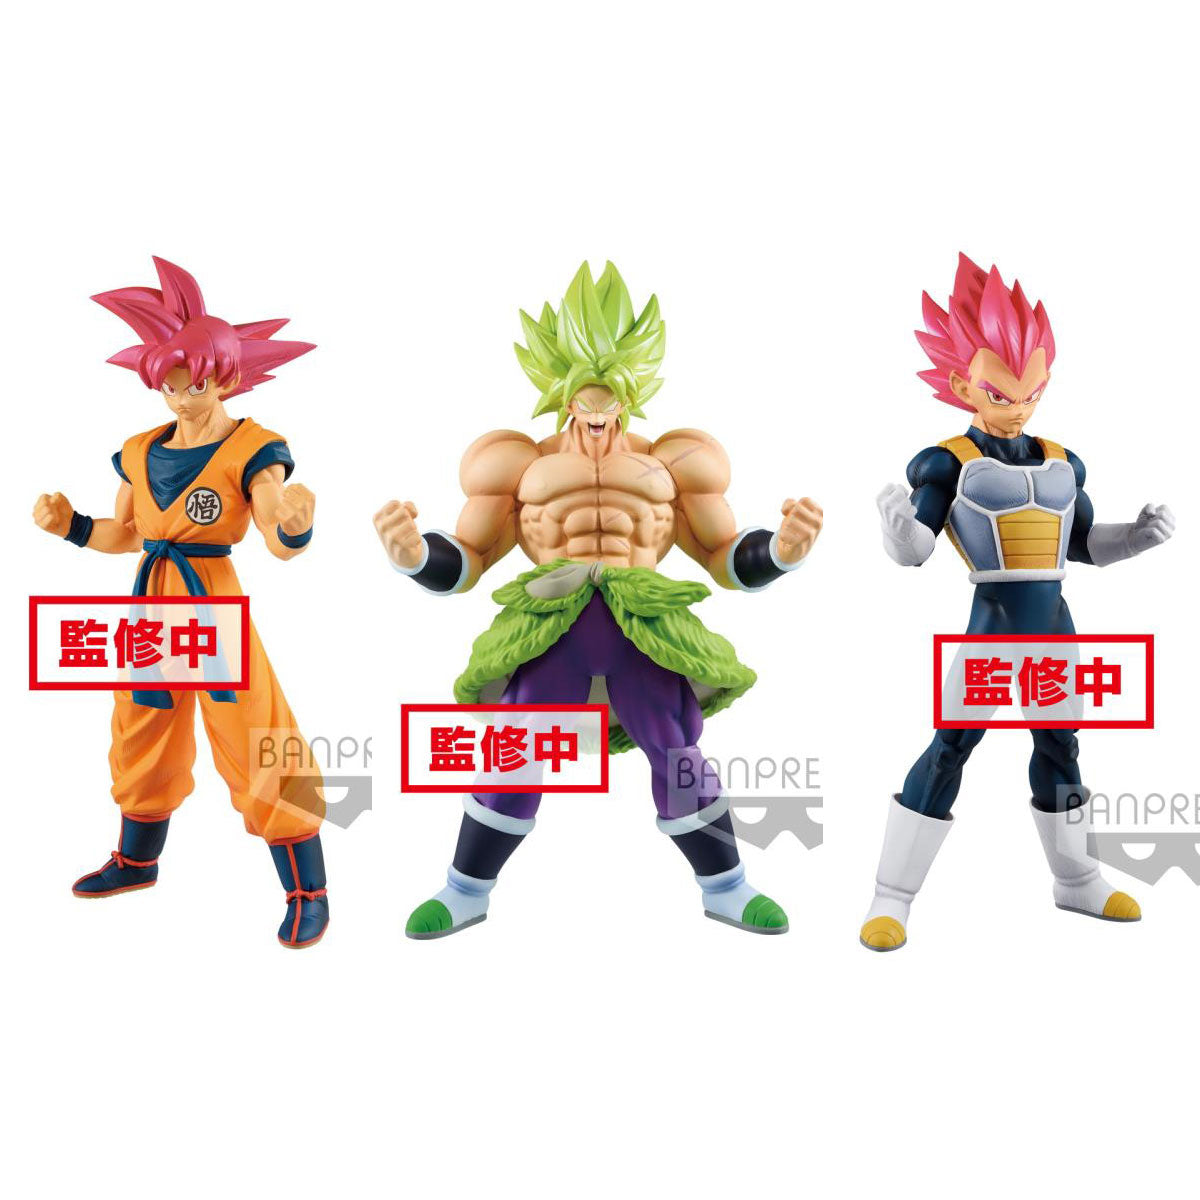 Banpresto - Dragon Ball Super the Movie - Chokoku Buyuden - Set of 3 (Super Saiyan God Goku, Super Saiyan Broly (Full Power), Super Saiyan God Vegeta) - Marvelous Toys